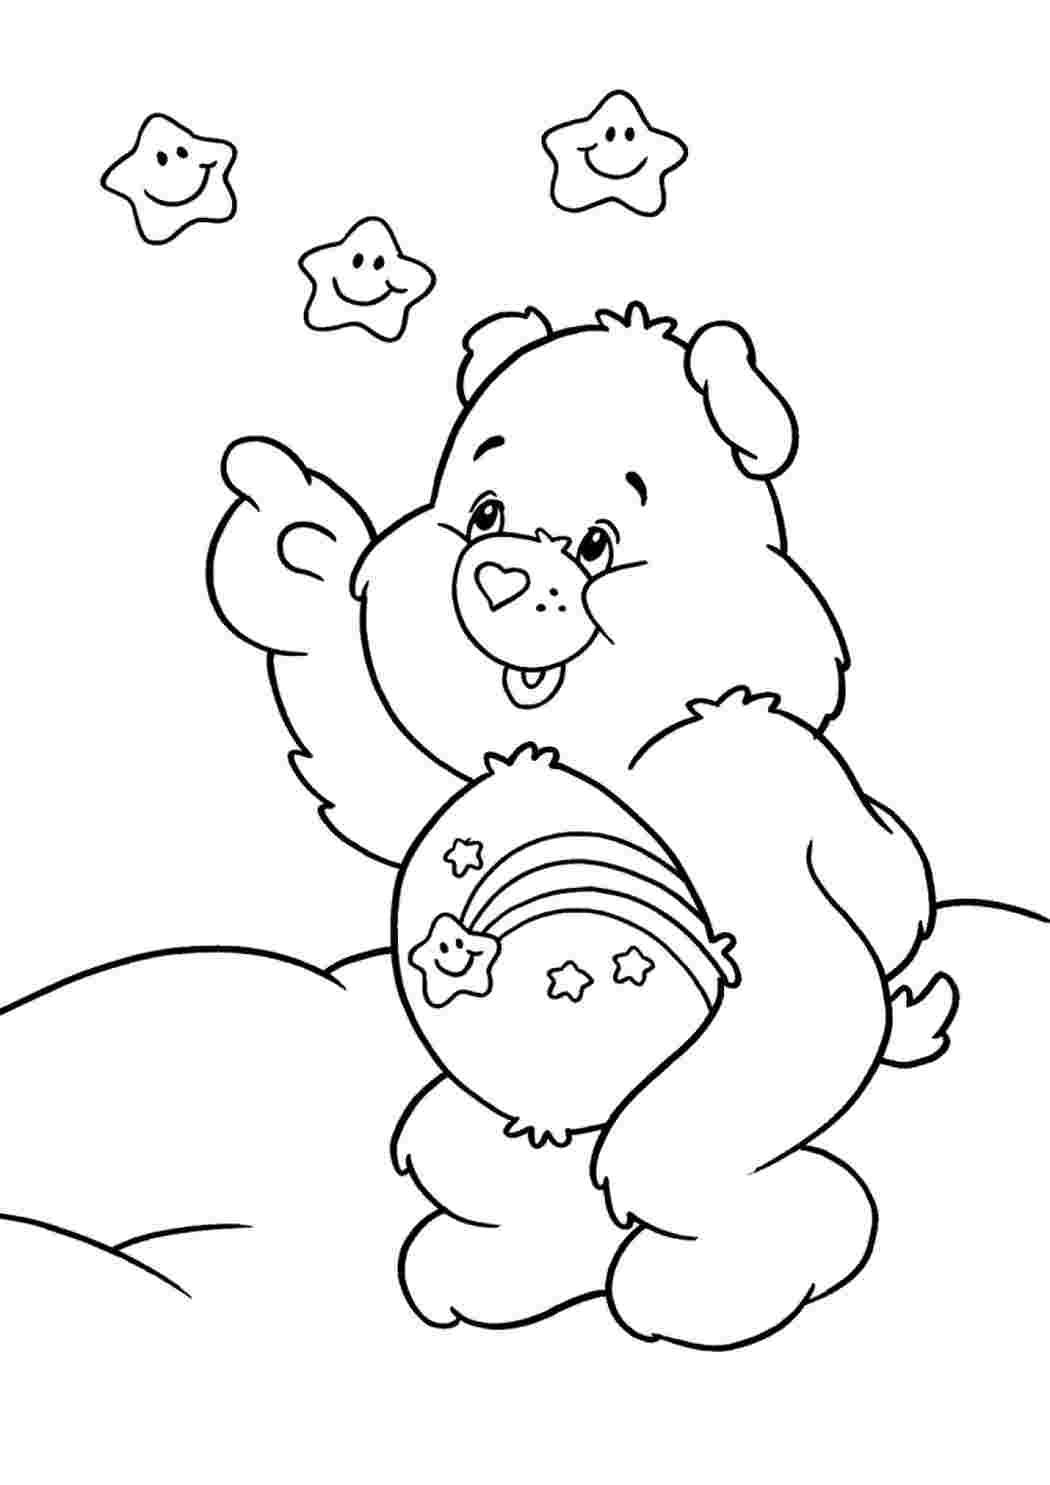 Care Bears раскраска